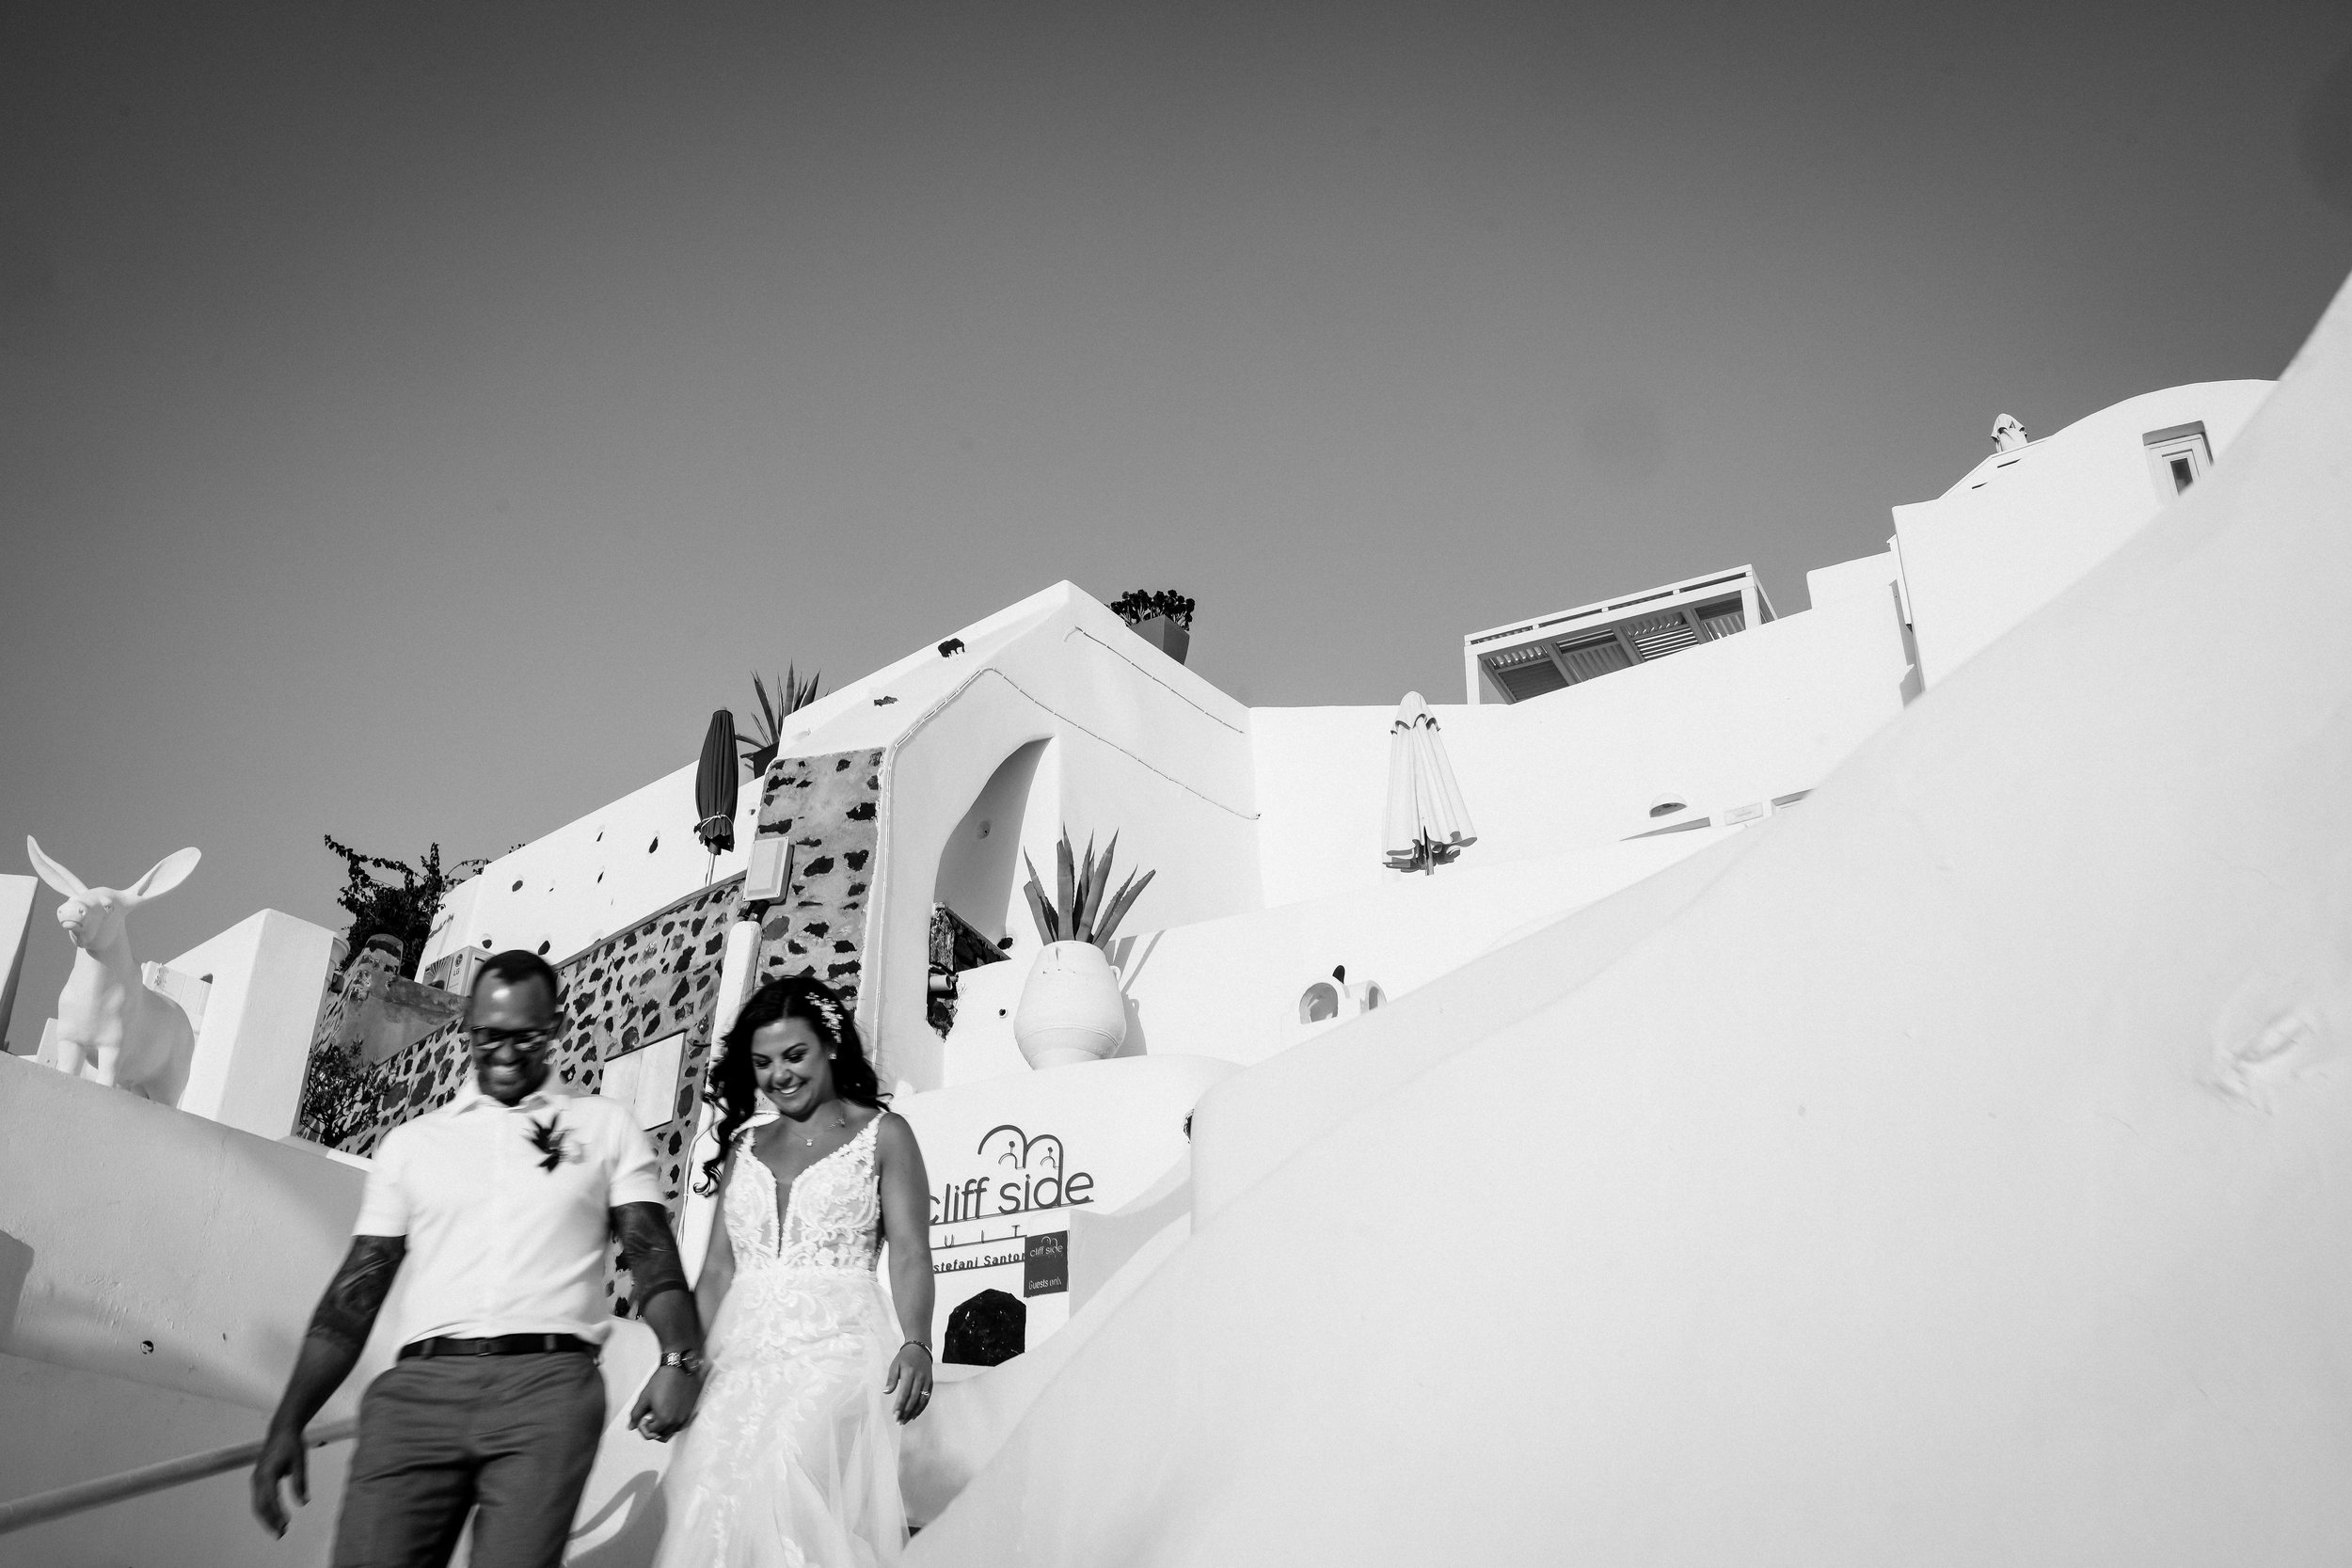 Santorini destination wedding Photography based in the UK - 037.jpg